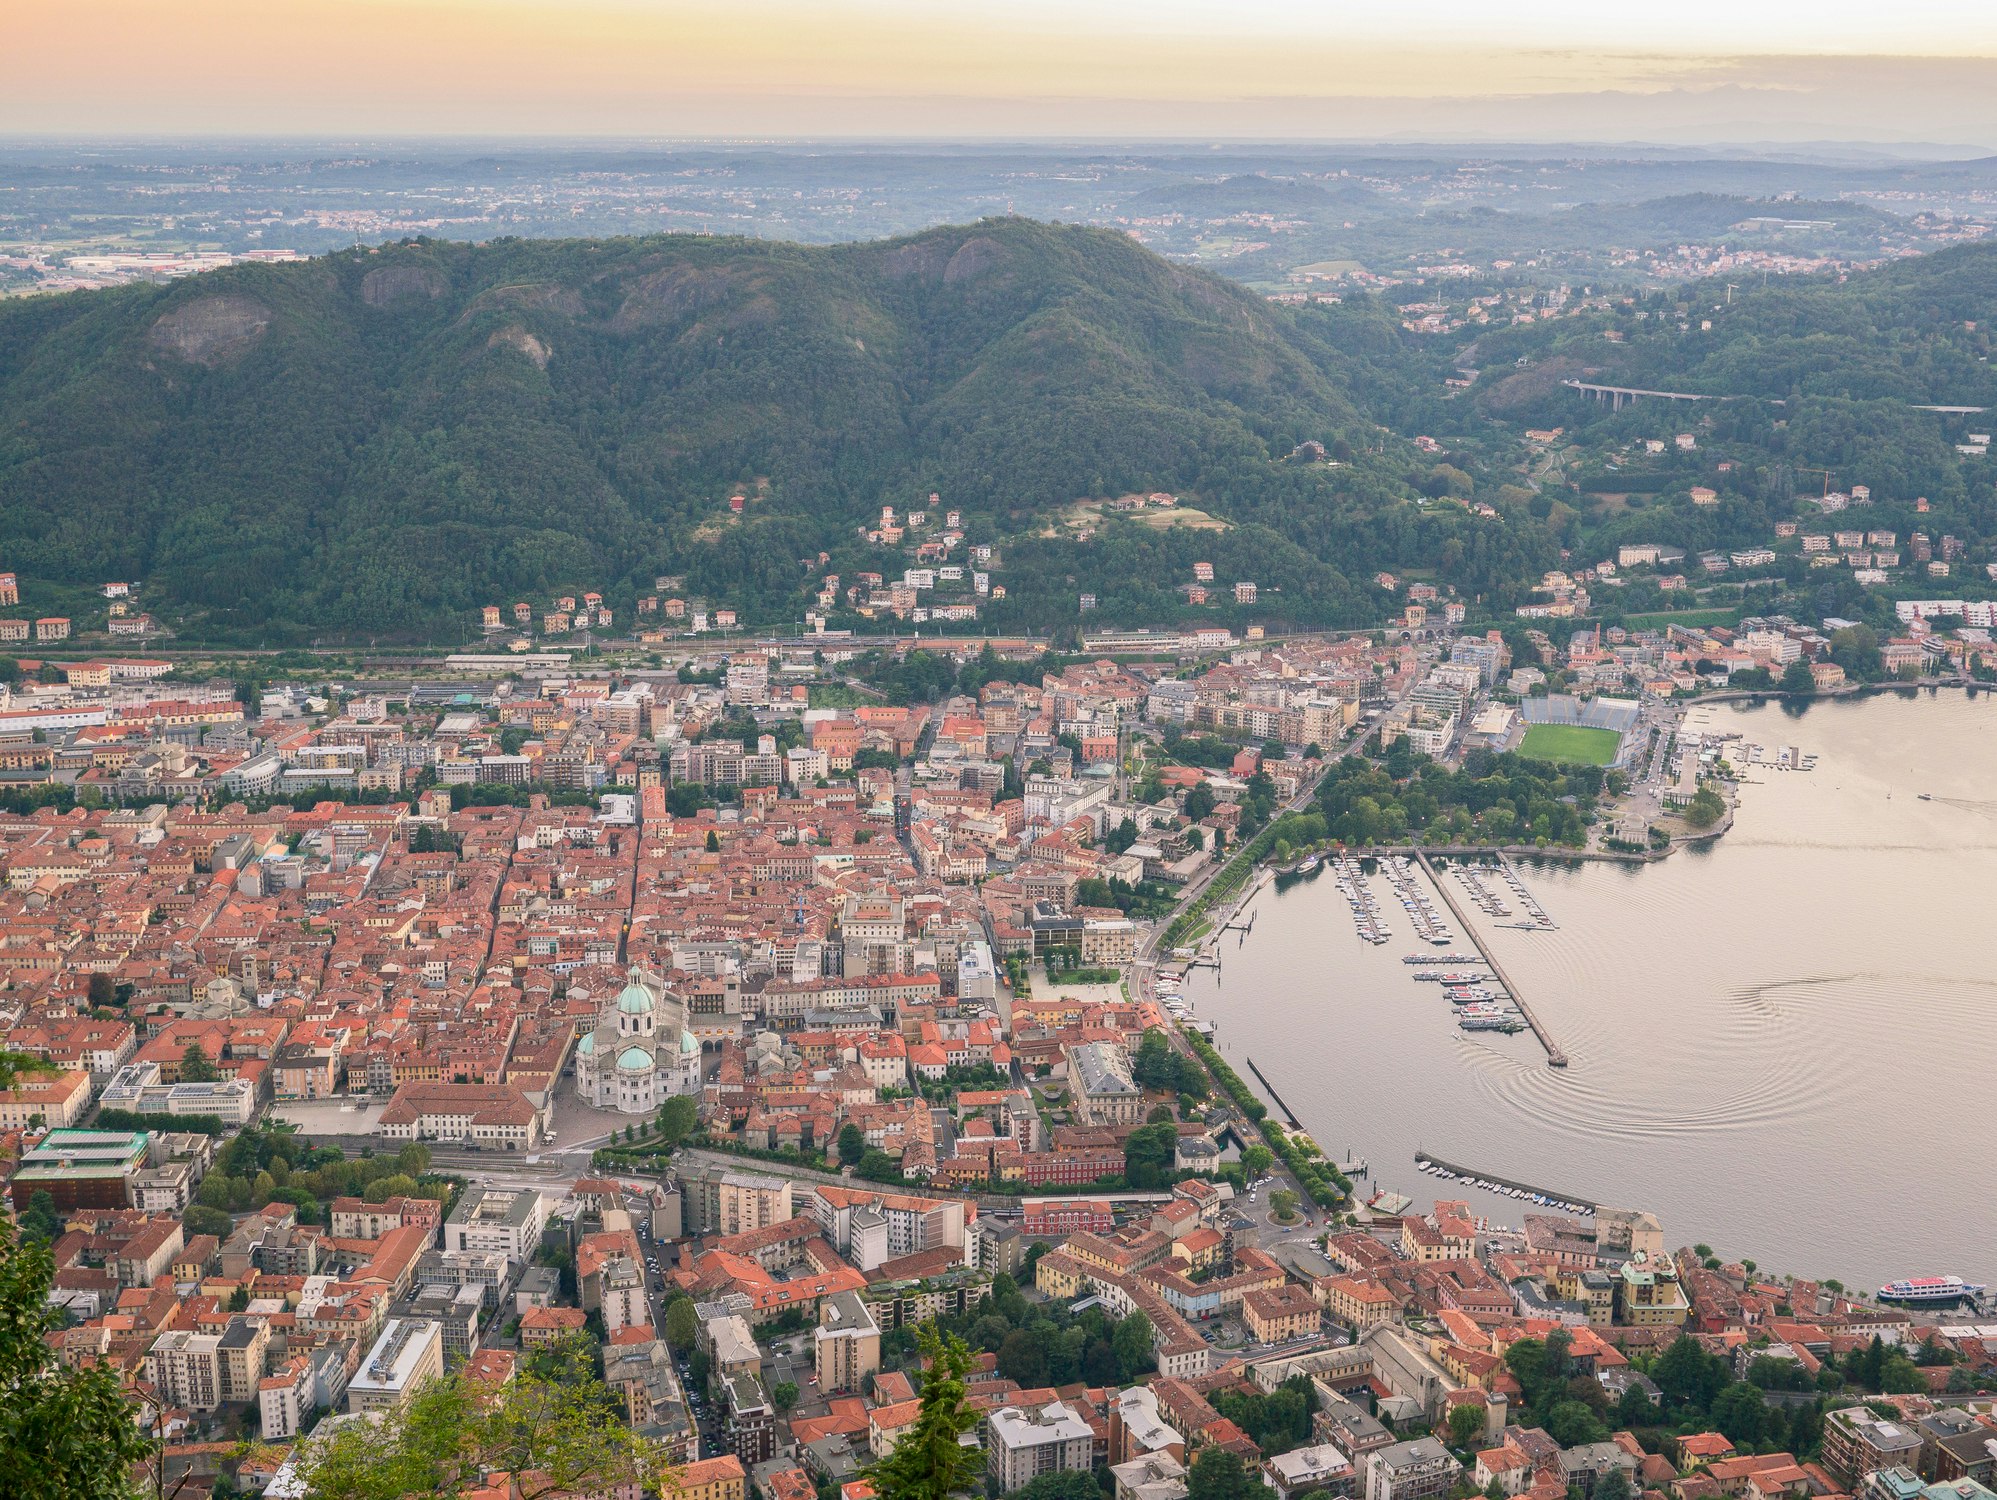 An aerial shot of the Italian city of Como